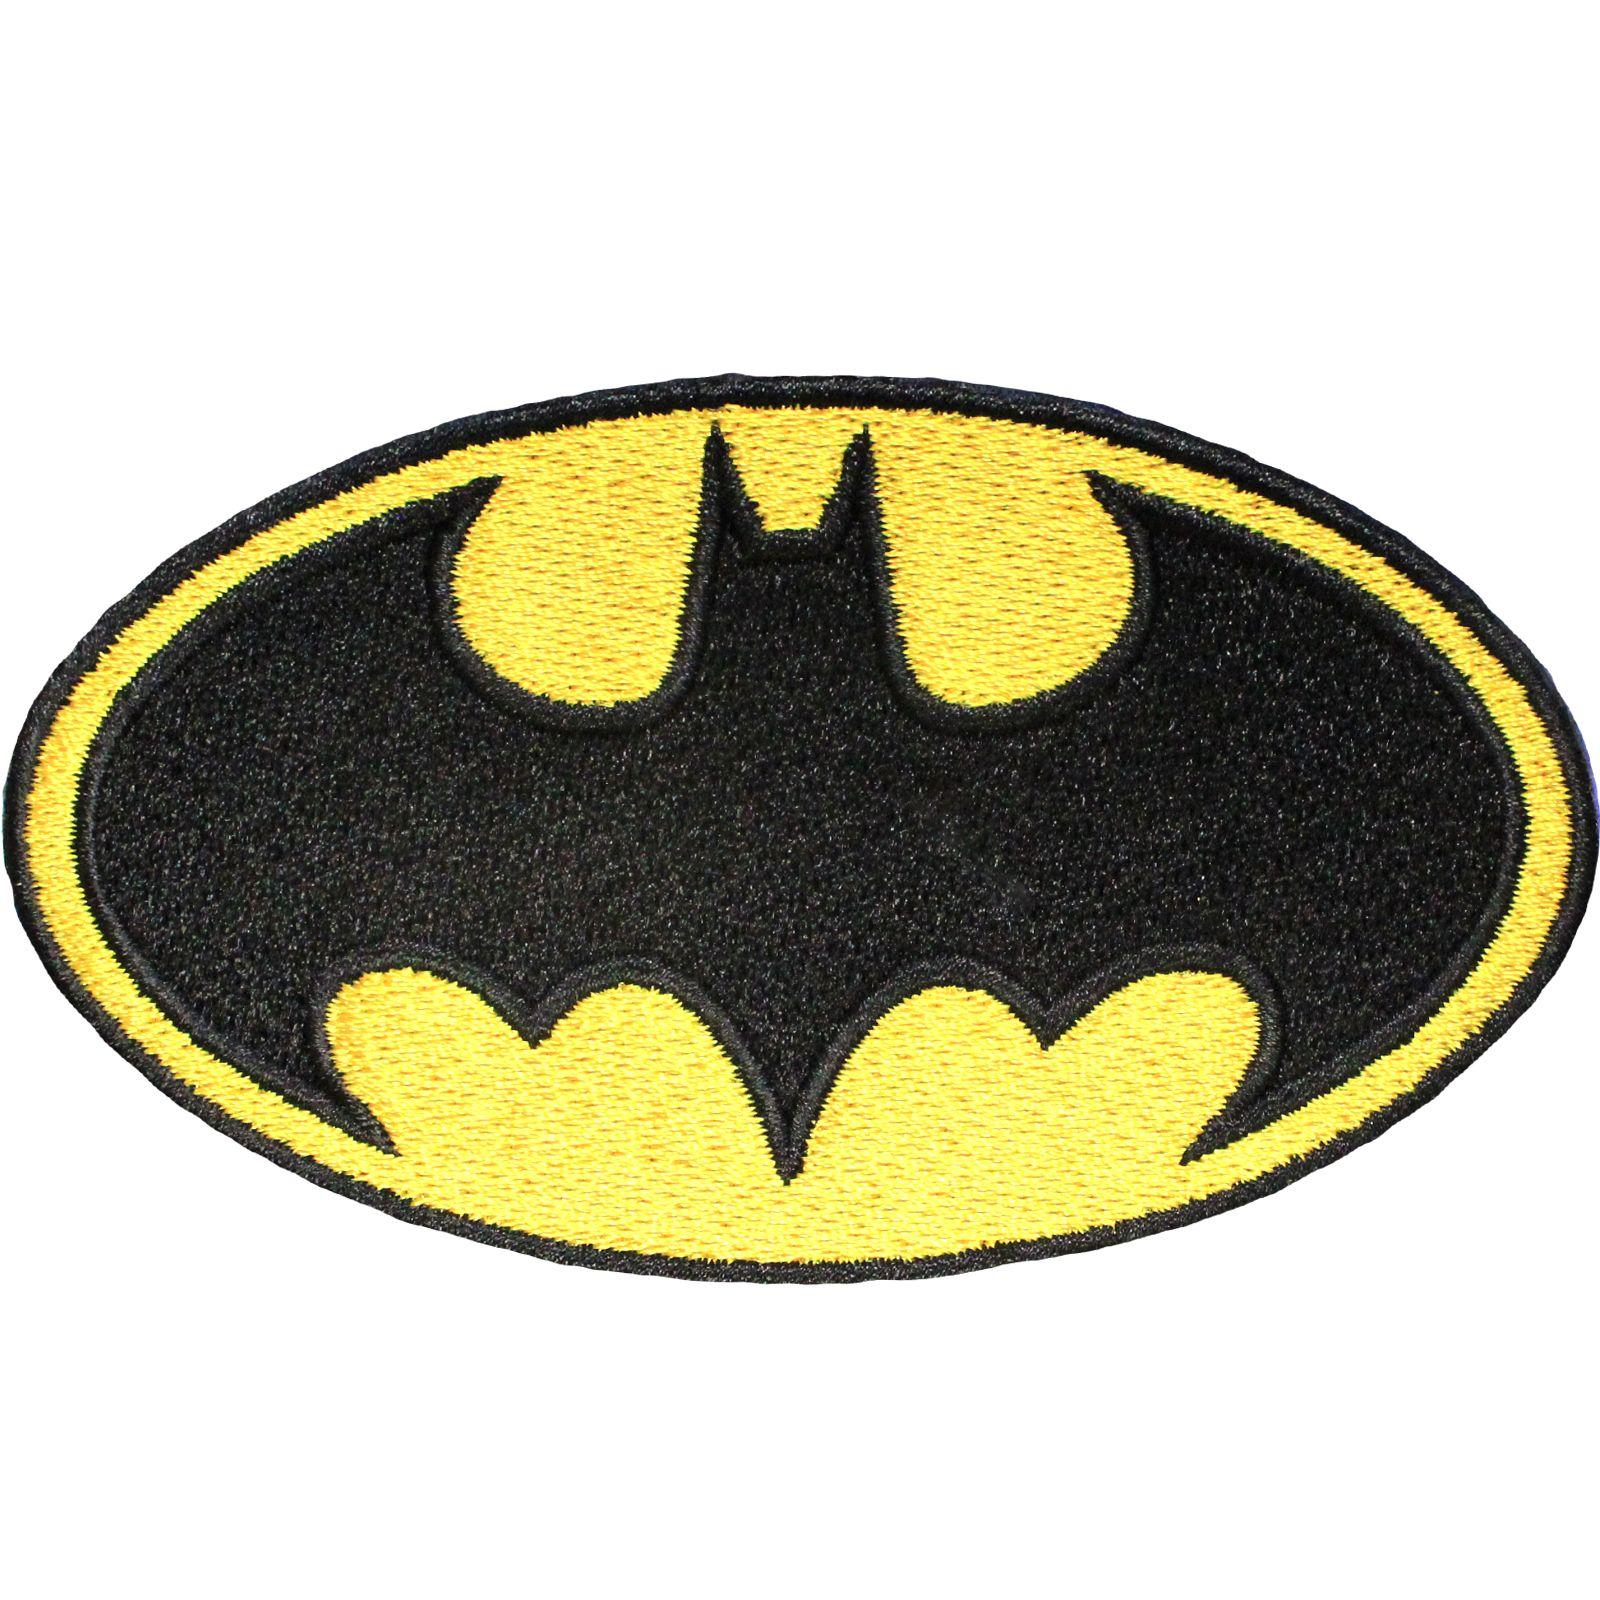 Batman's Logo - Details about Official DC Comics Batman The Dark Knight Classic Logo Iron  on Superhero Patch